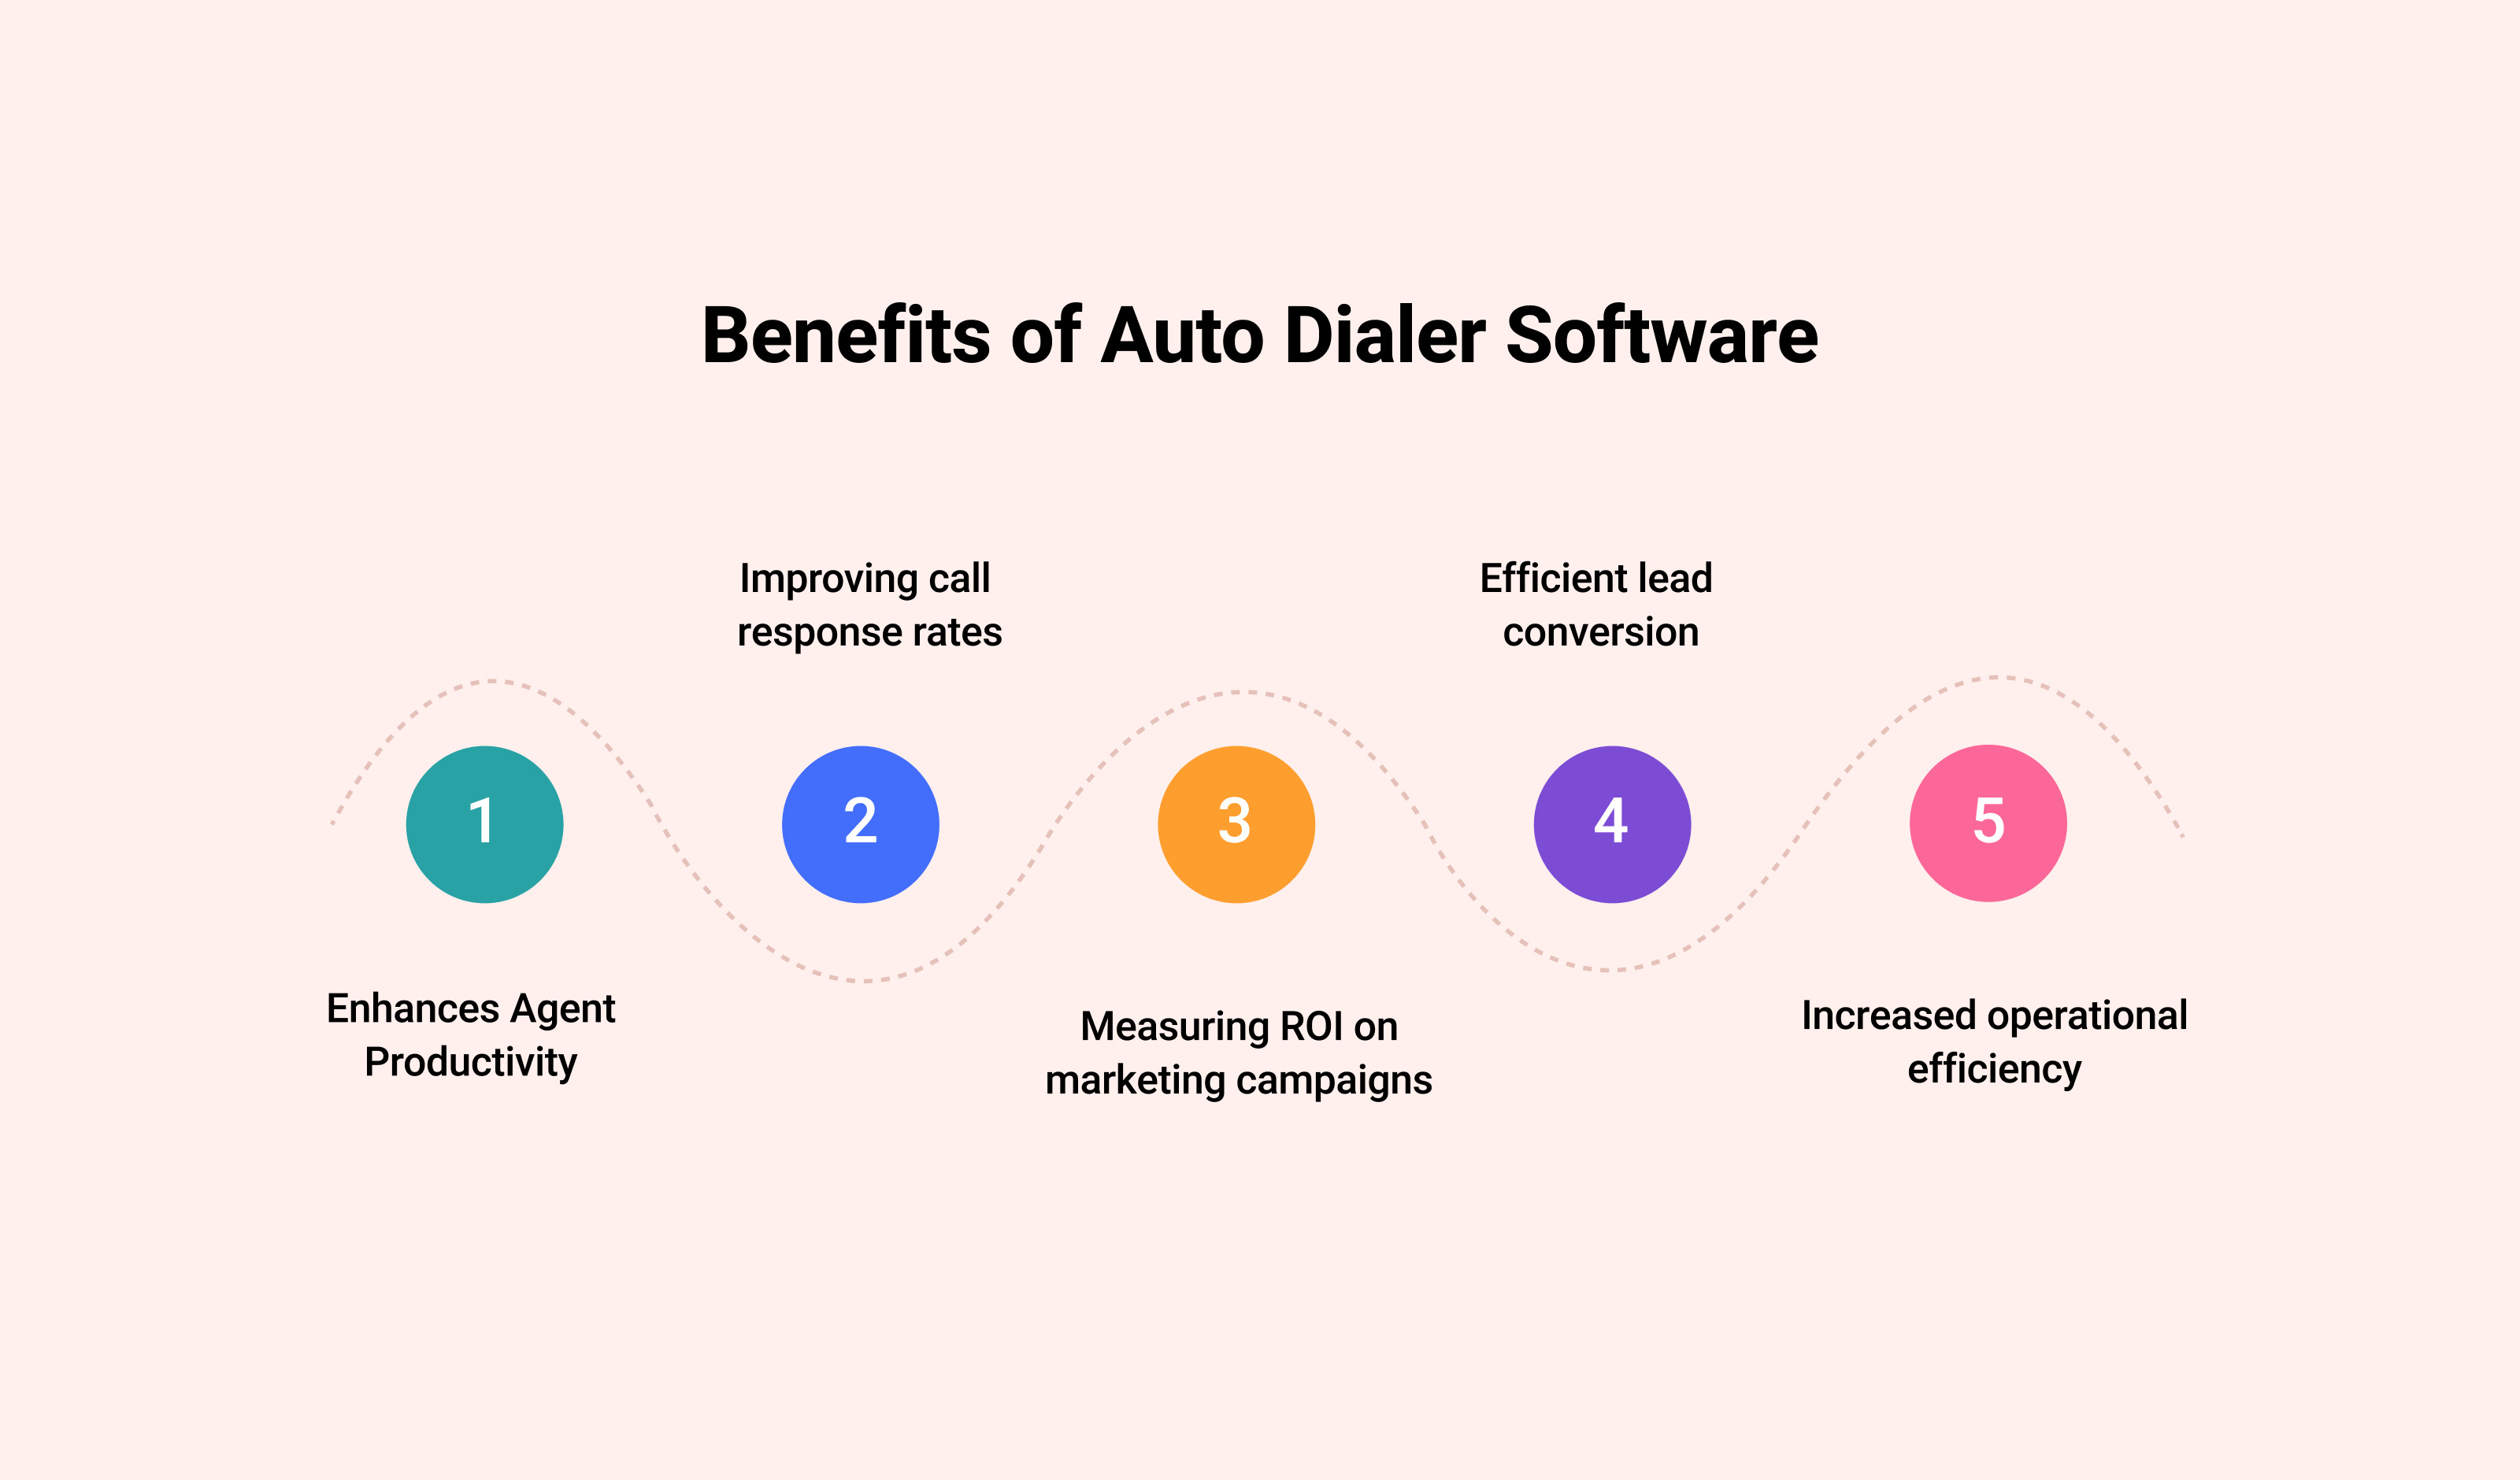 Benefits of Auto Dialer Software: